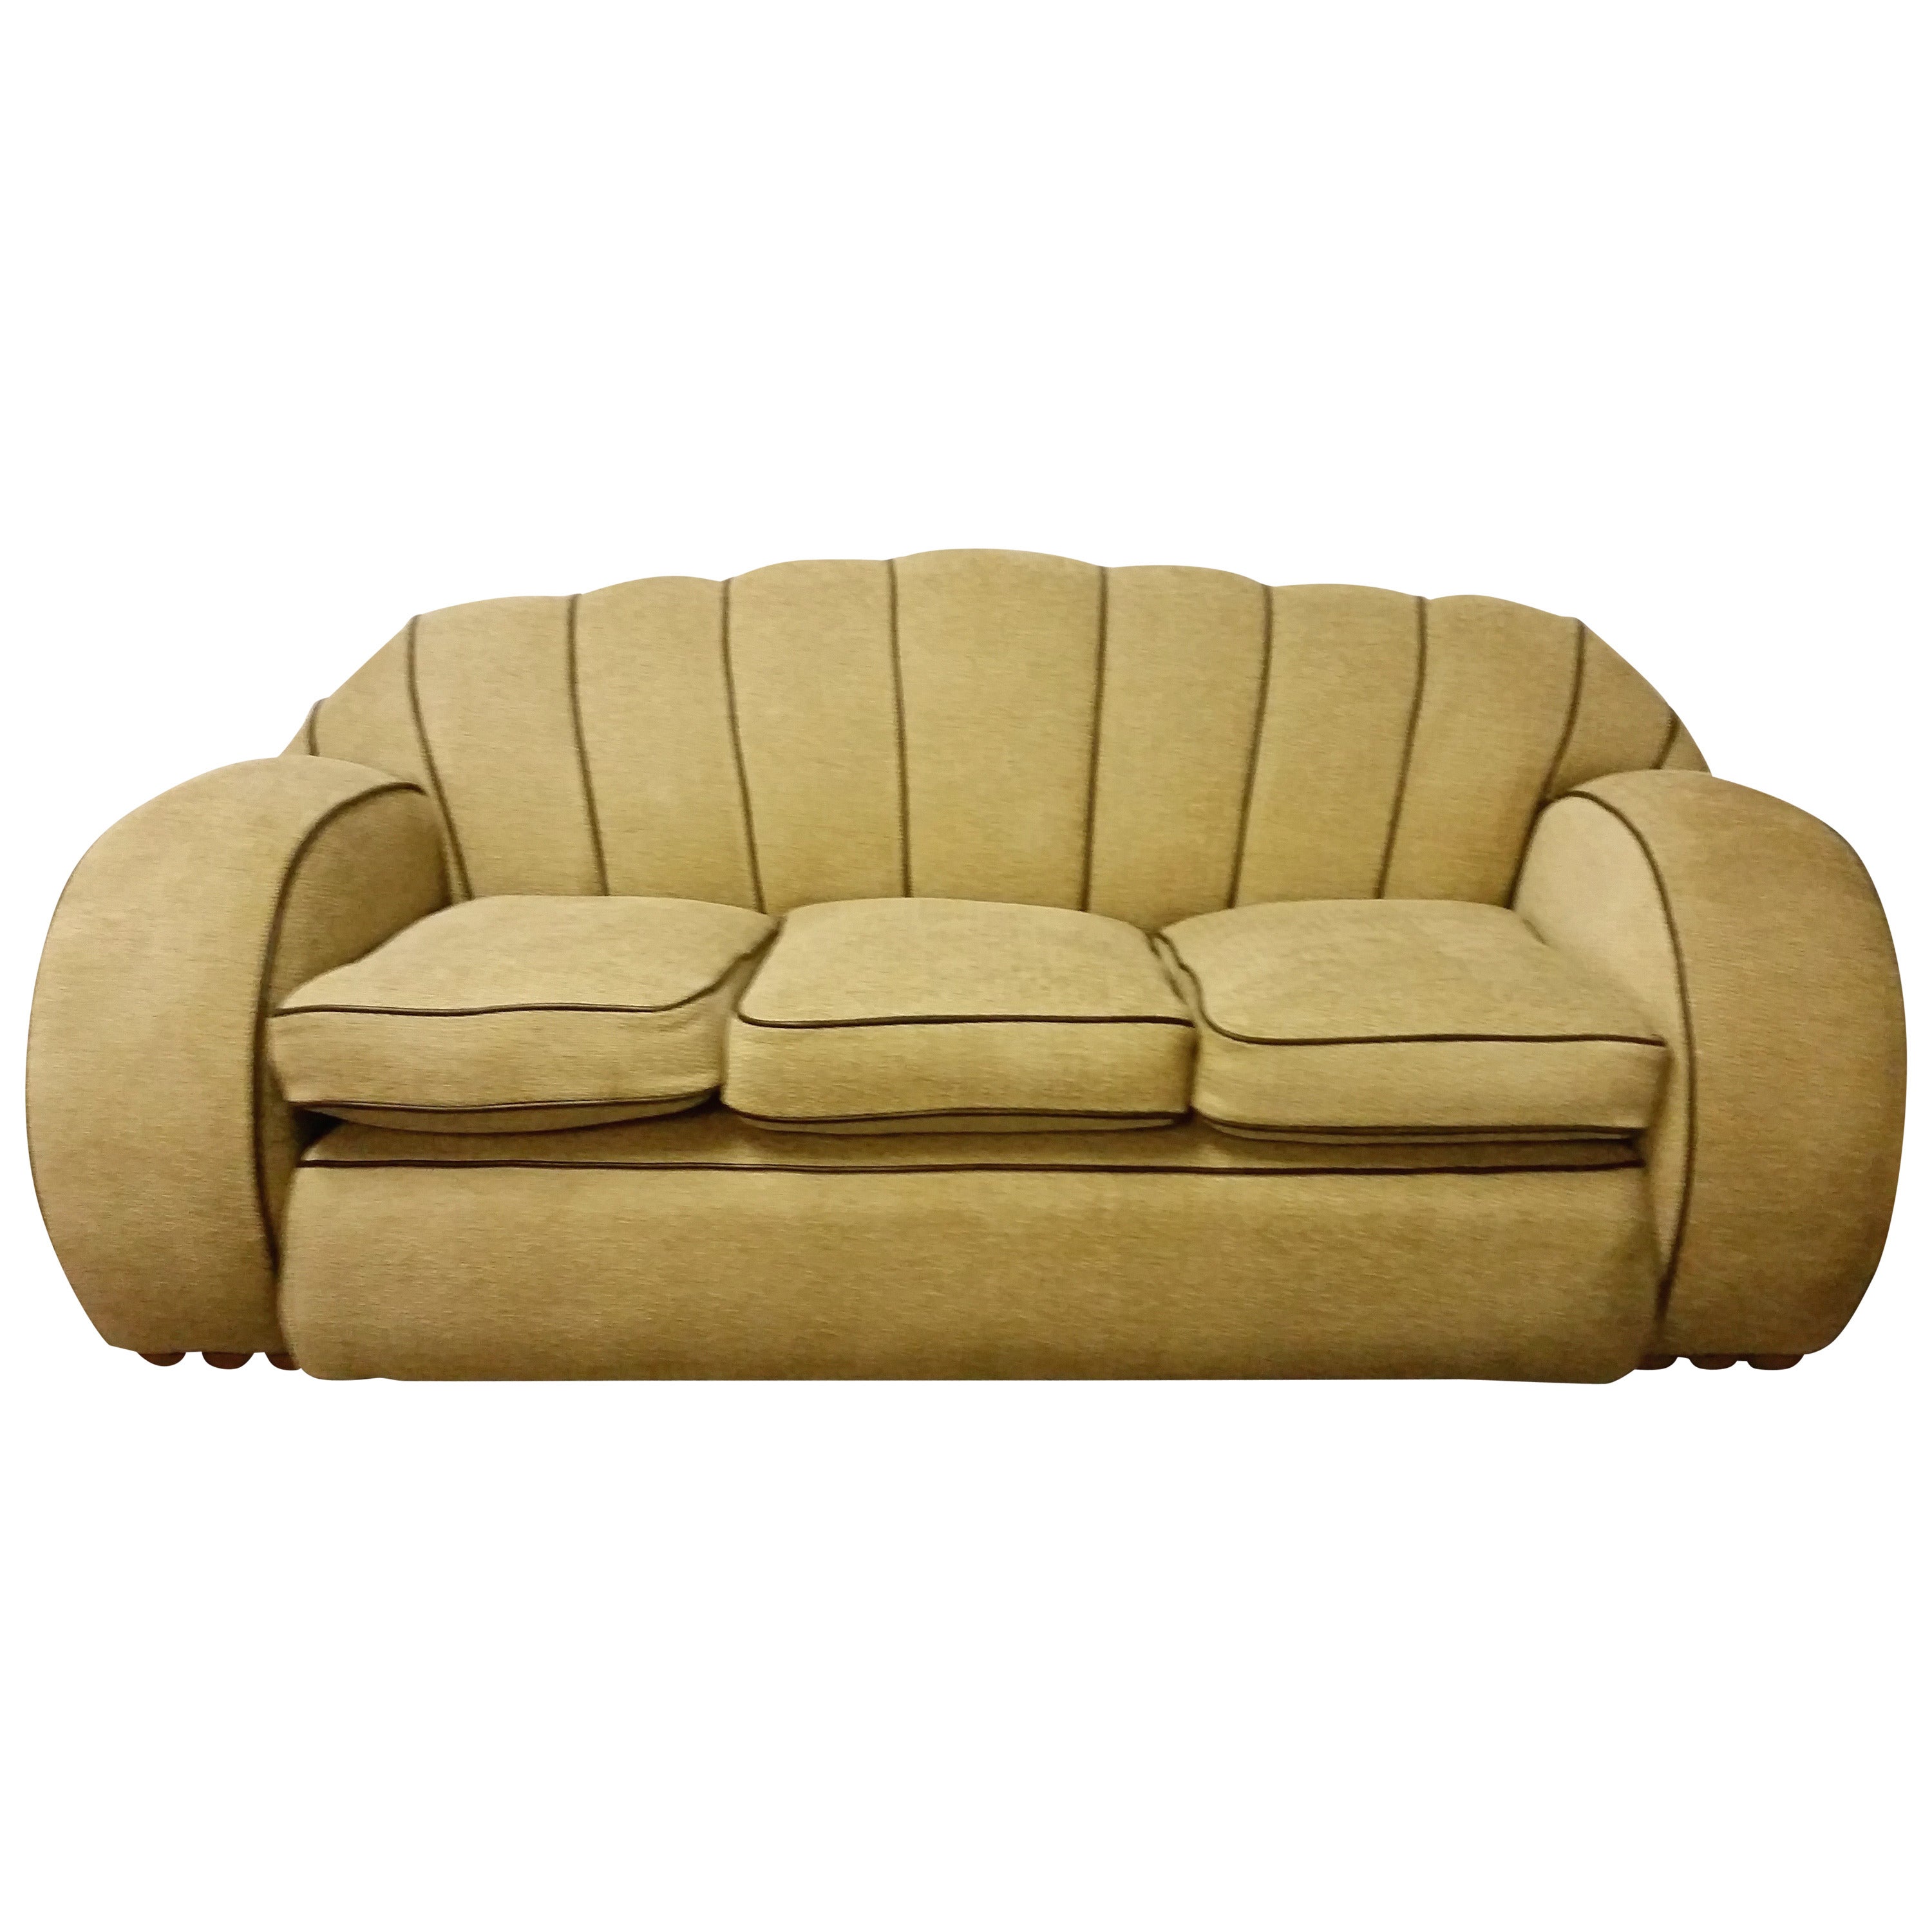 Awesome Art Deco Sofa